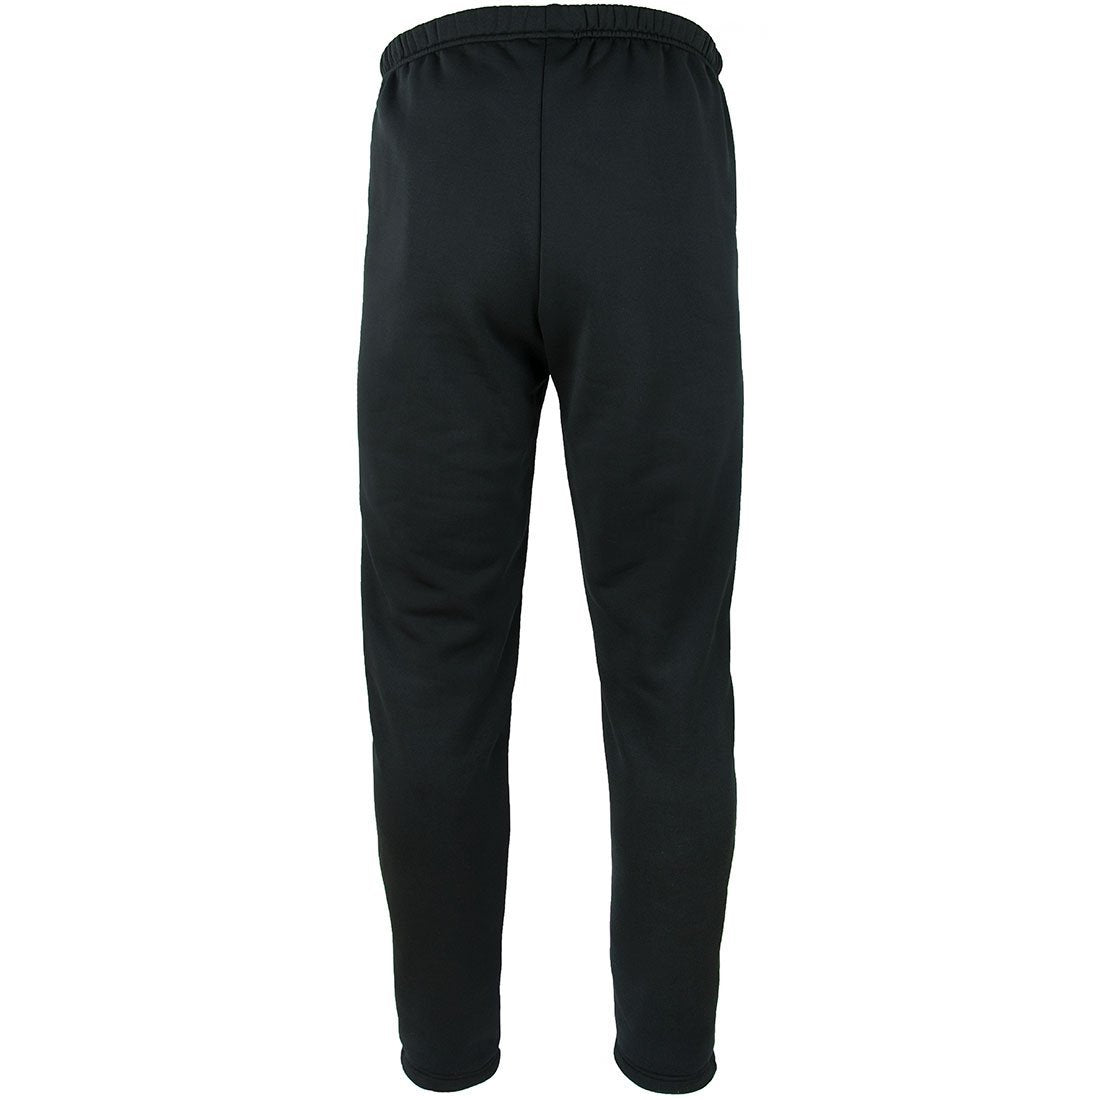 Polartec® Powerstretch® Flex Pants (Men's)-Made in Ely, MN.